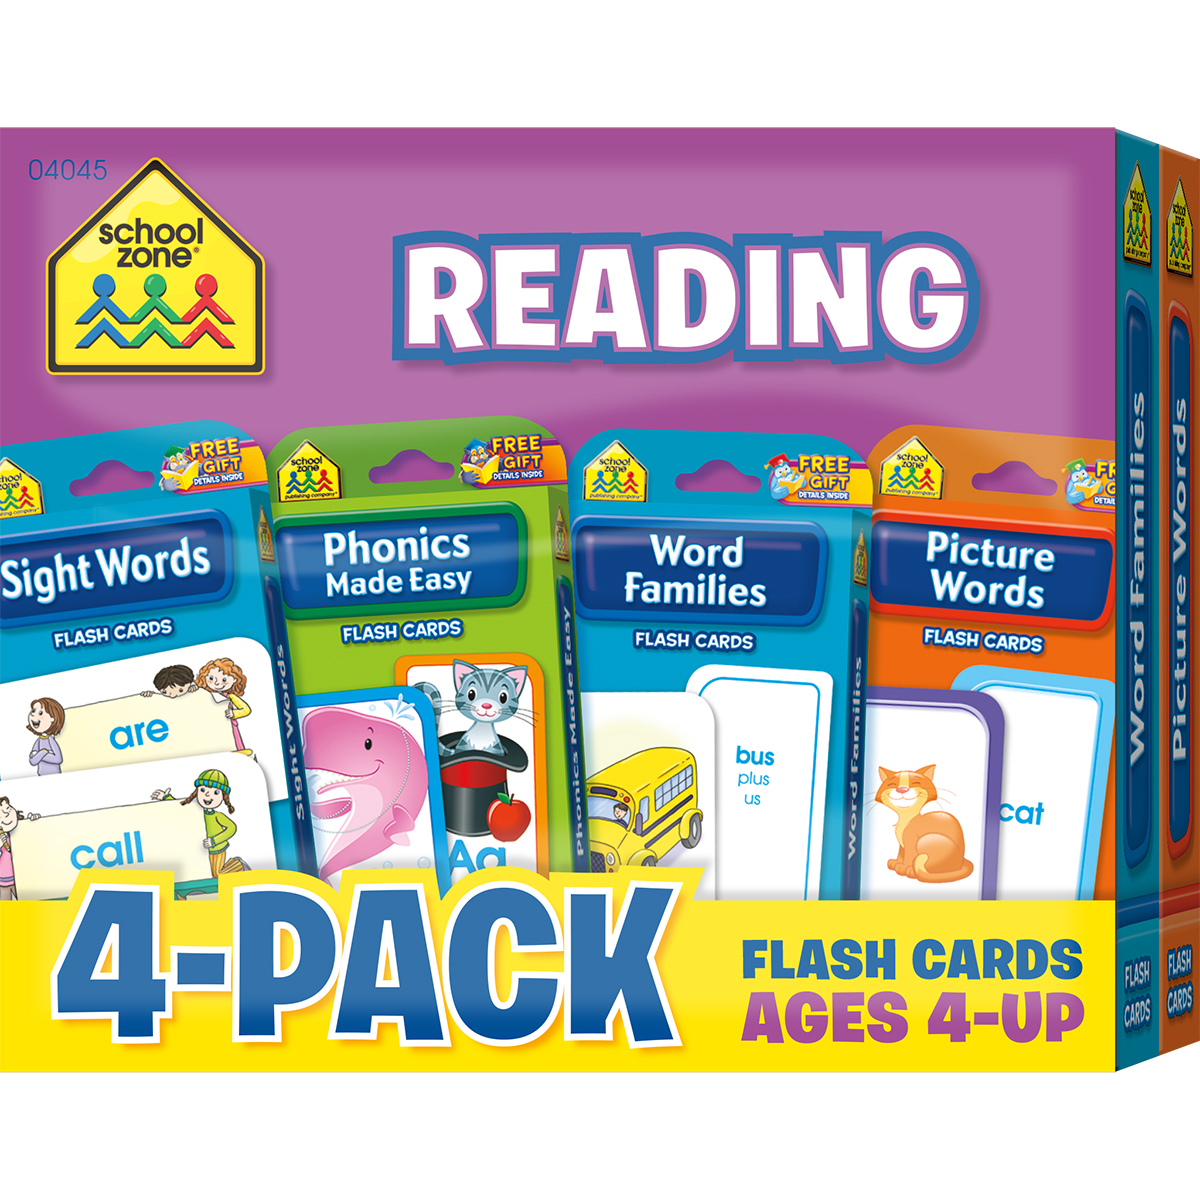 School Zone Sz040-45 Flash Cards - Reading